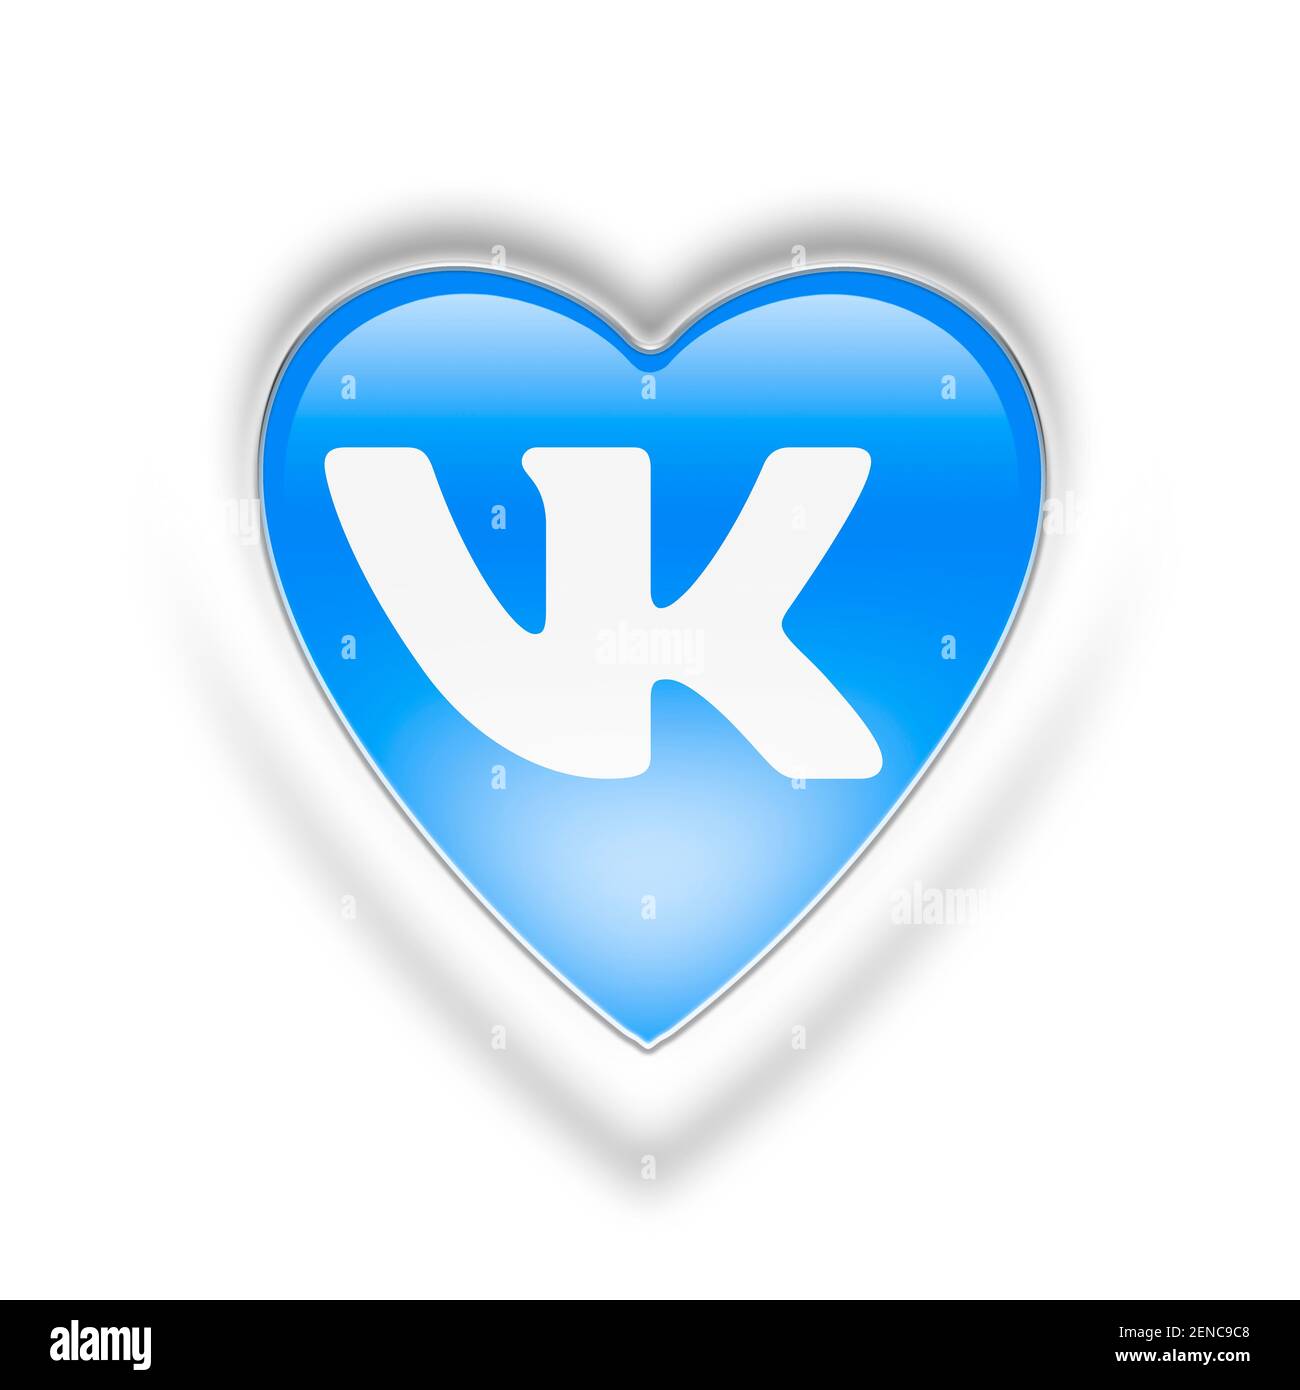 VK VKontakte logo Stock Photo - Alamy